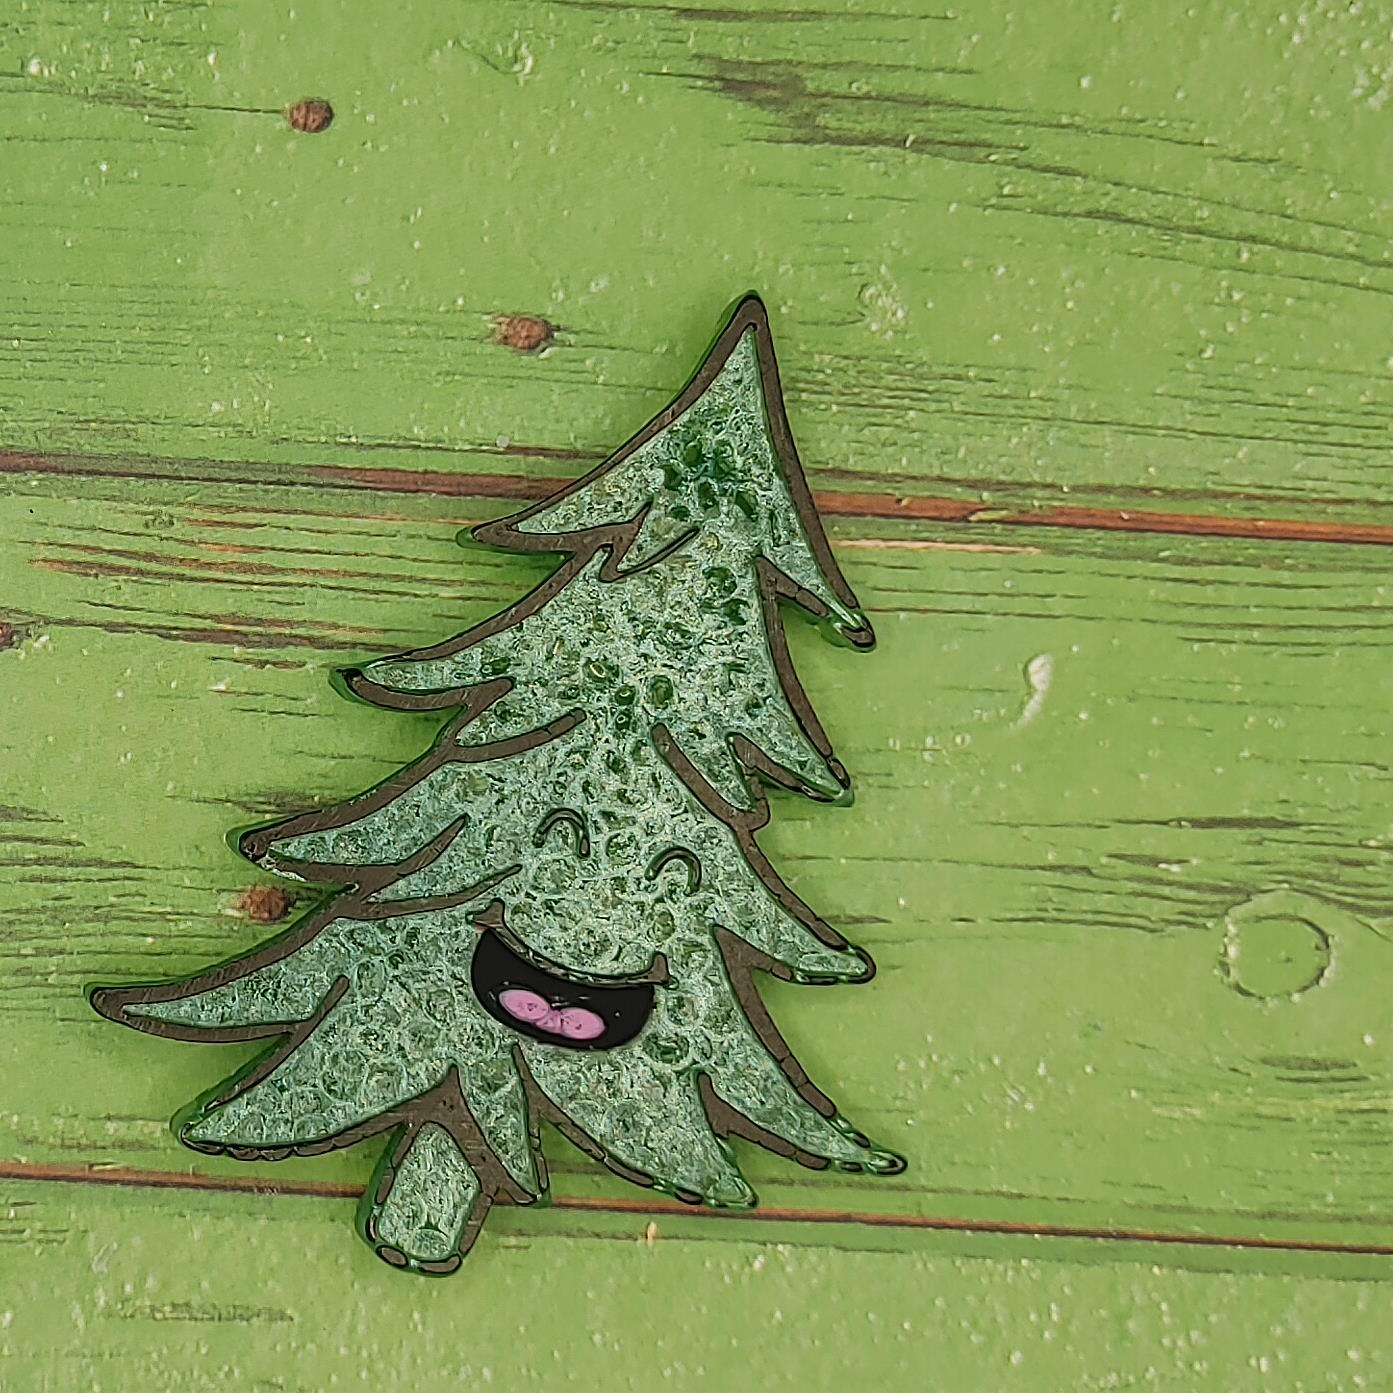 Happy Christmas Tree - Silicone Freshie Mold